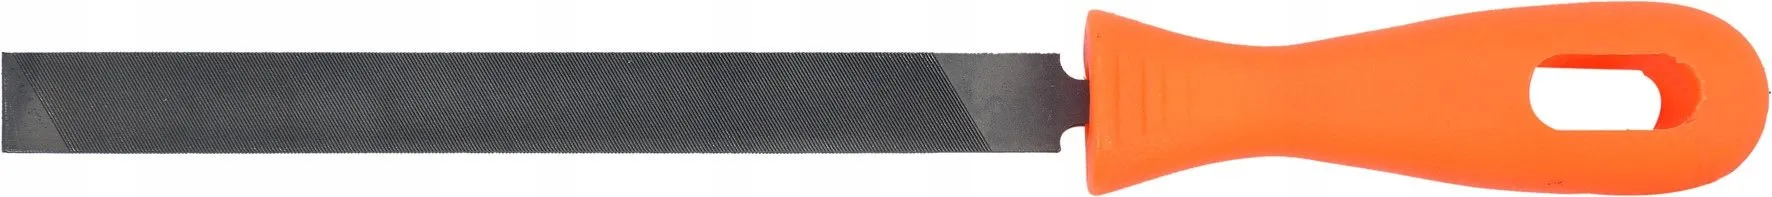 Напильник плоский для шлифования ограничителей глубины 15х2х250мм Yato YT-85022